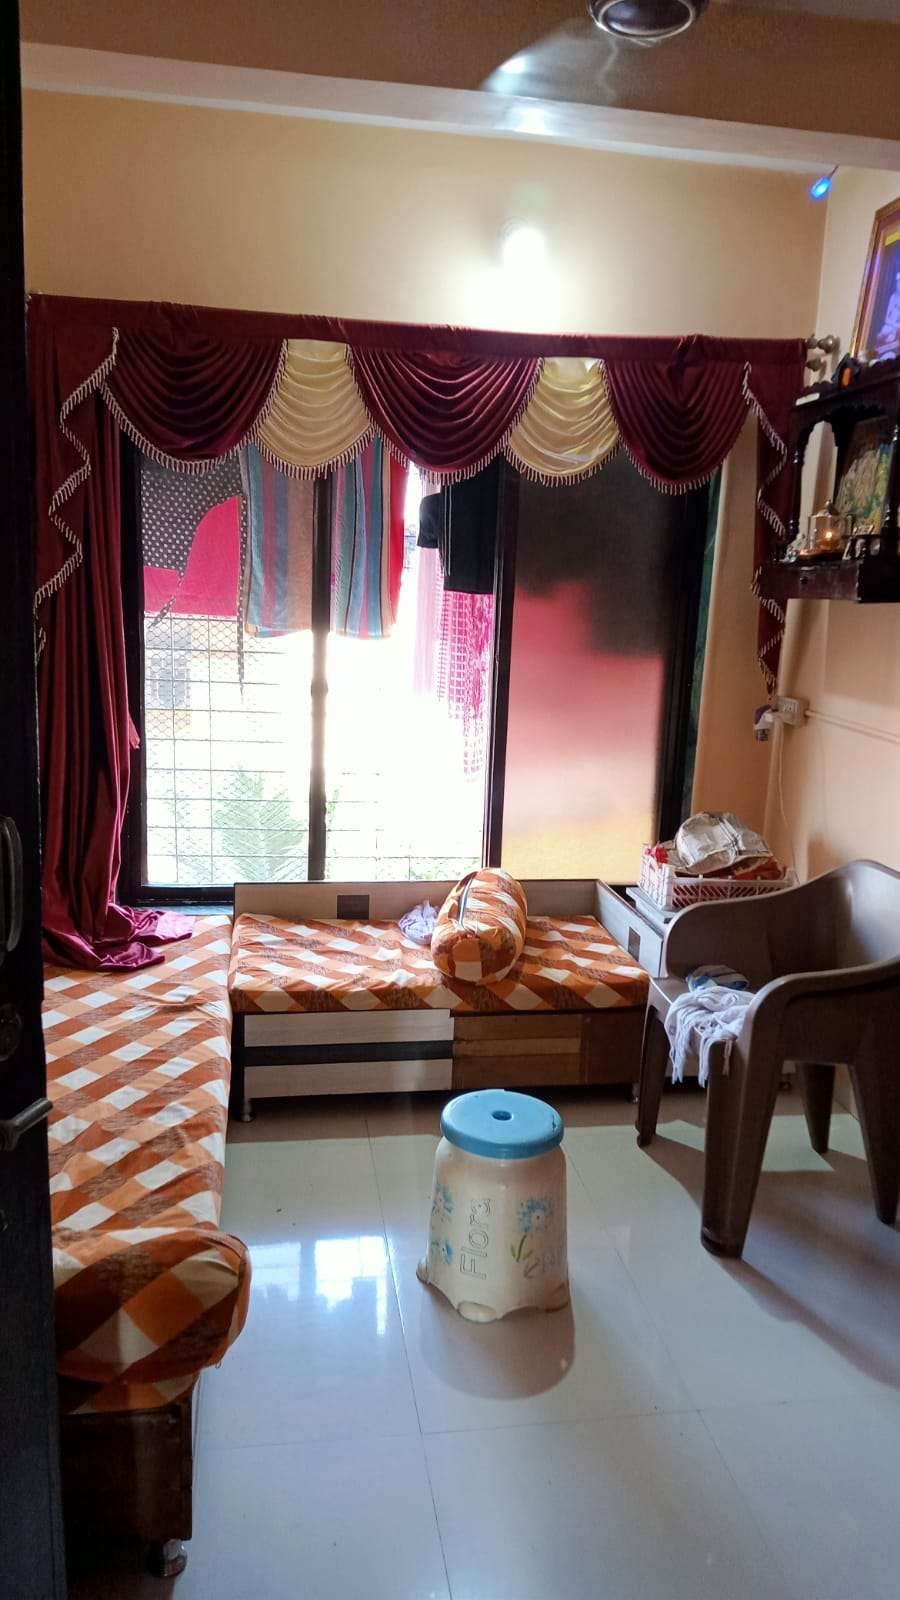 Studio Apartment For Resale in Nalasopara West Mumbai 6033138